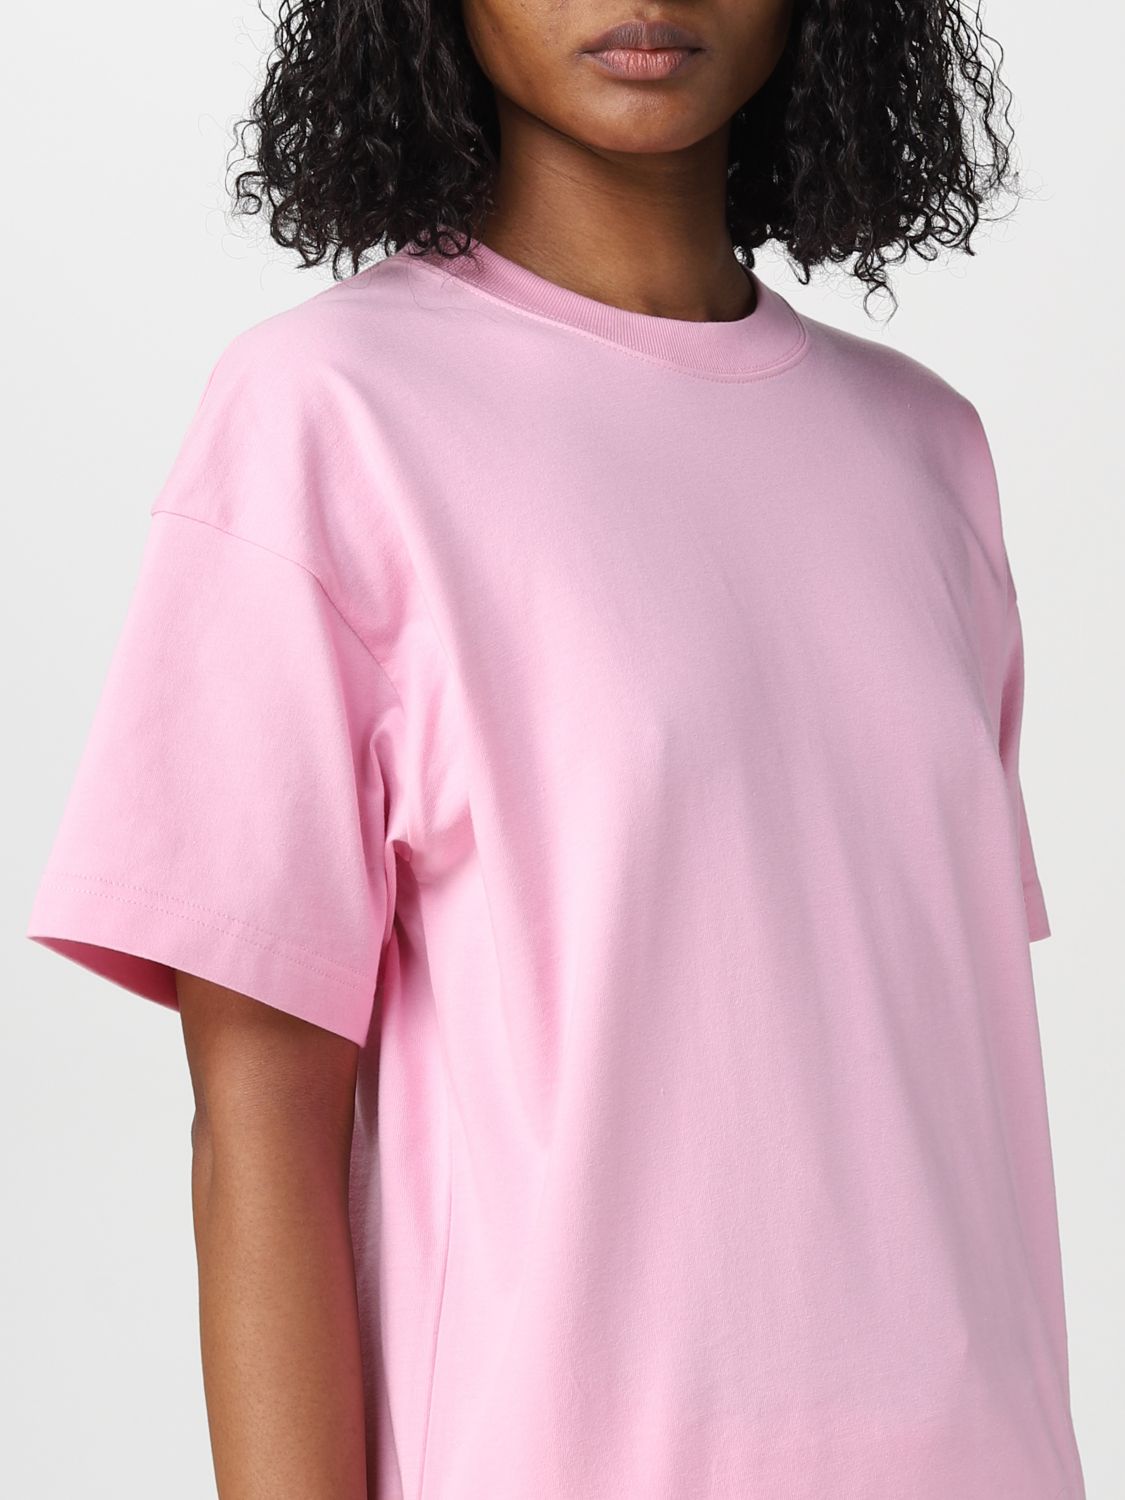 Caps Tshirt Boxy Fit in Pink  Balenciaga US